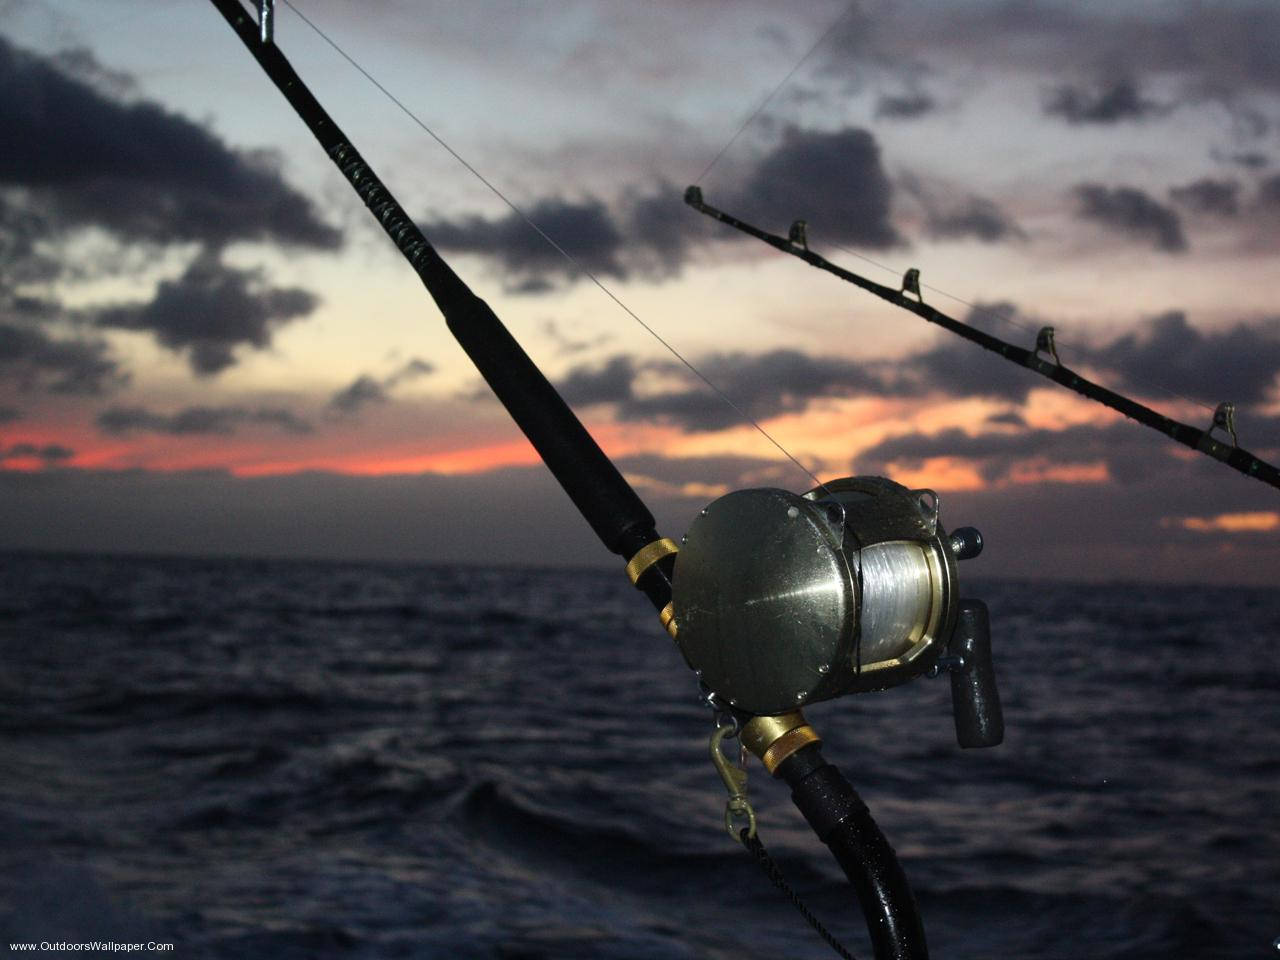 Fishing At Sunset